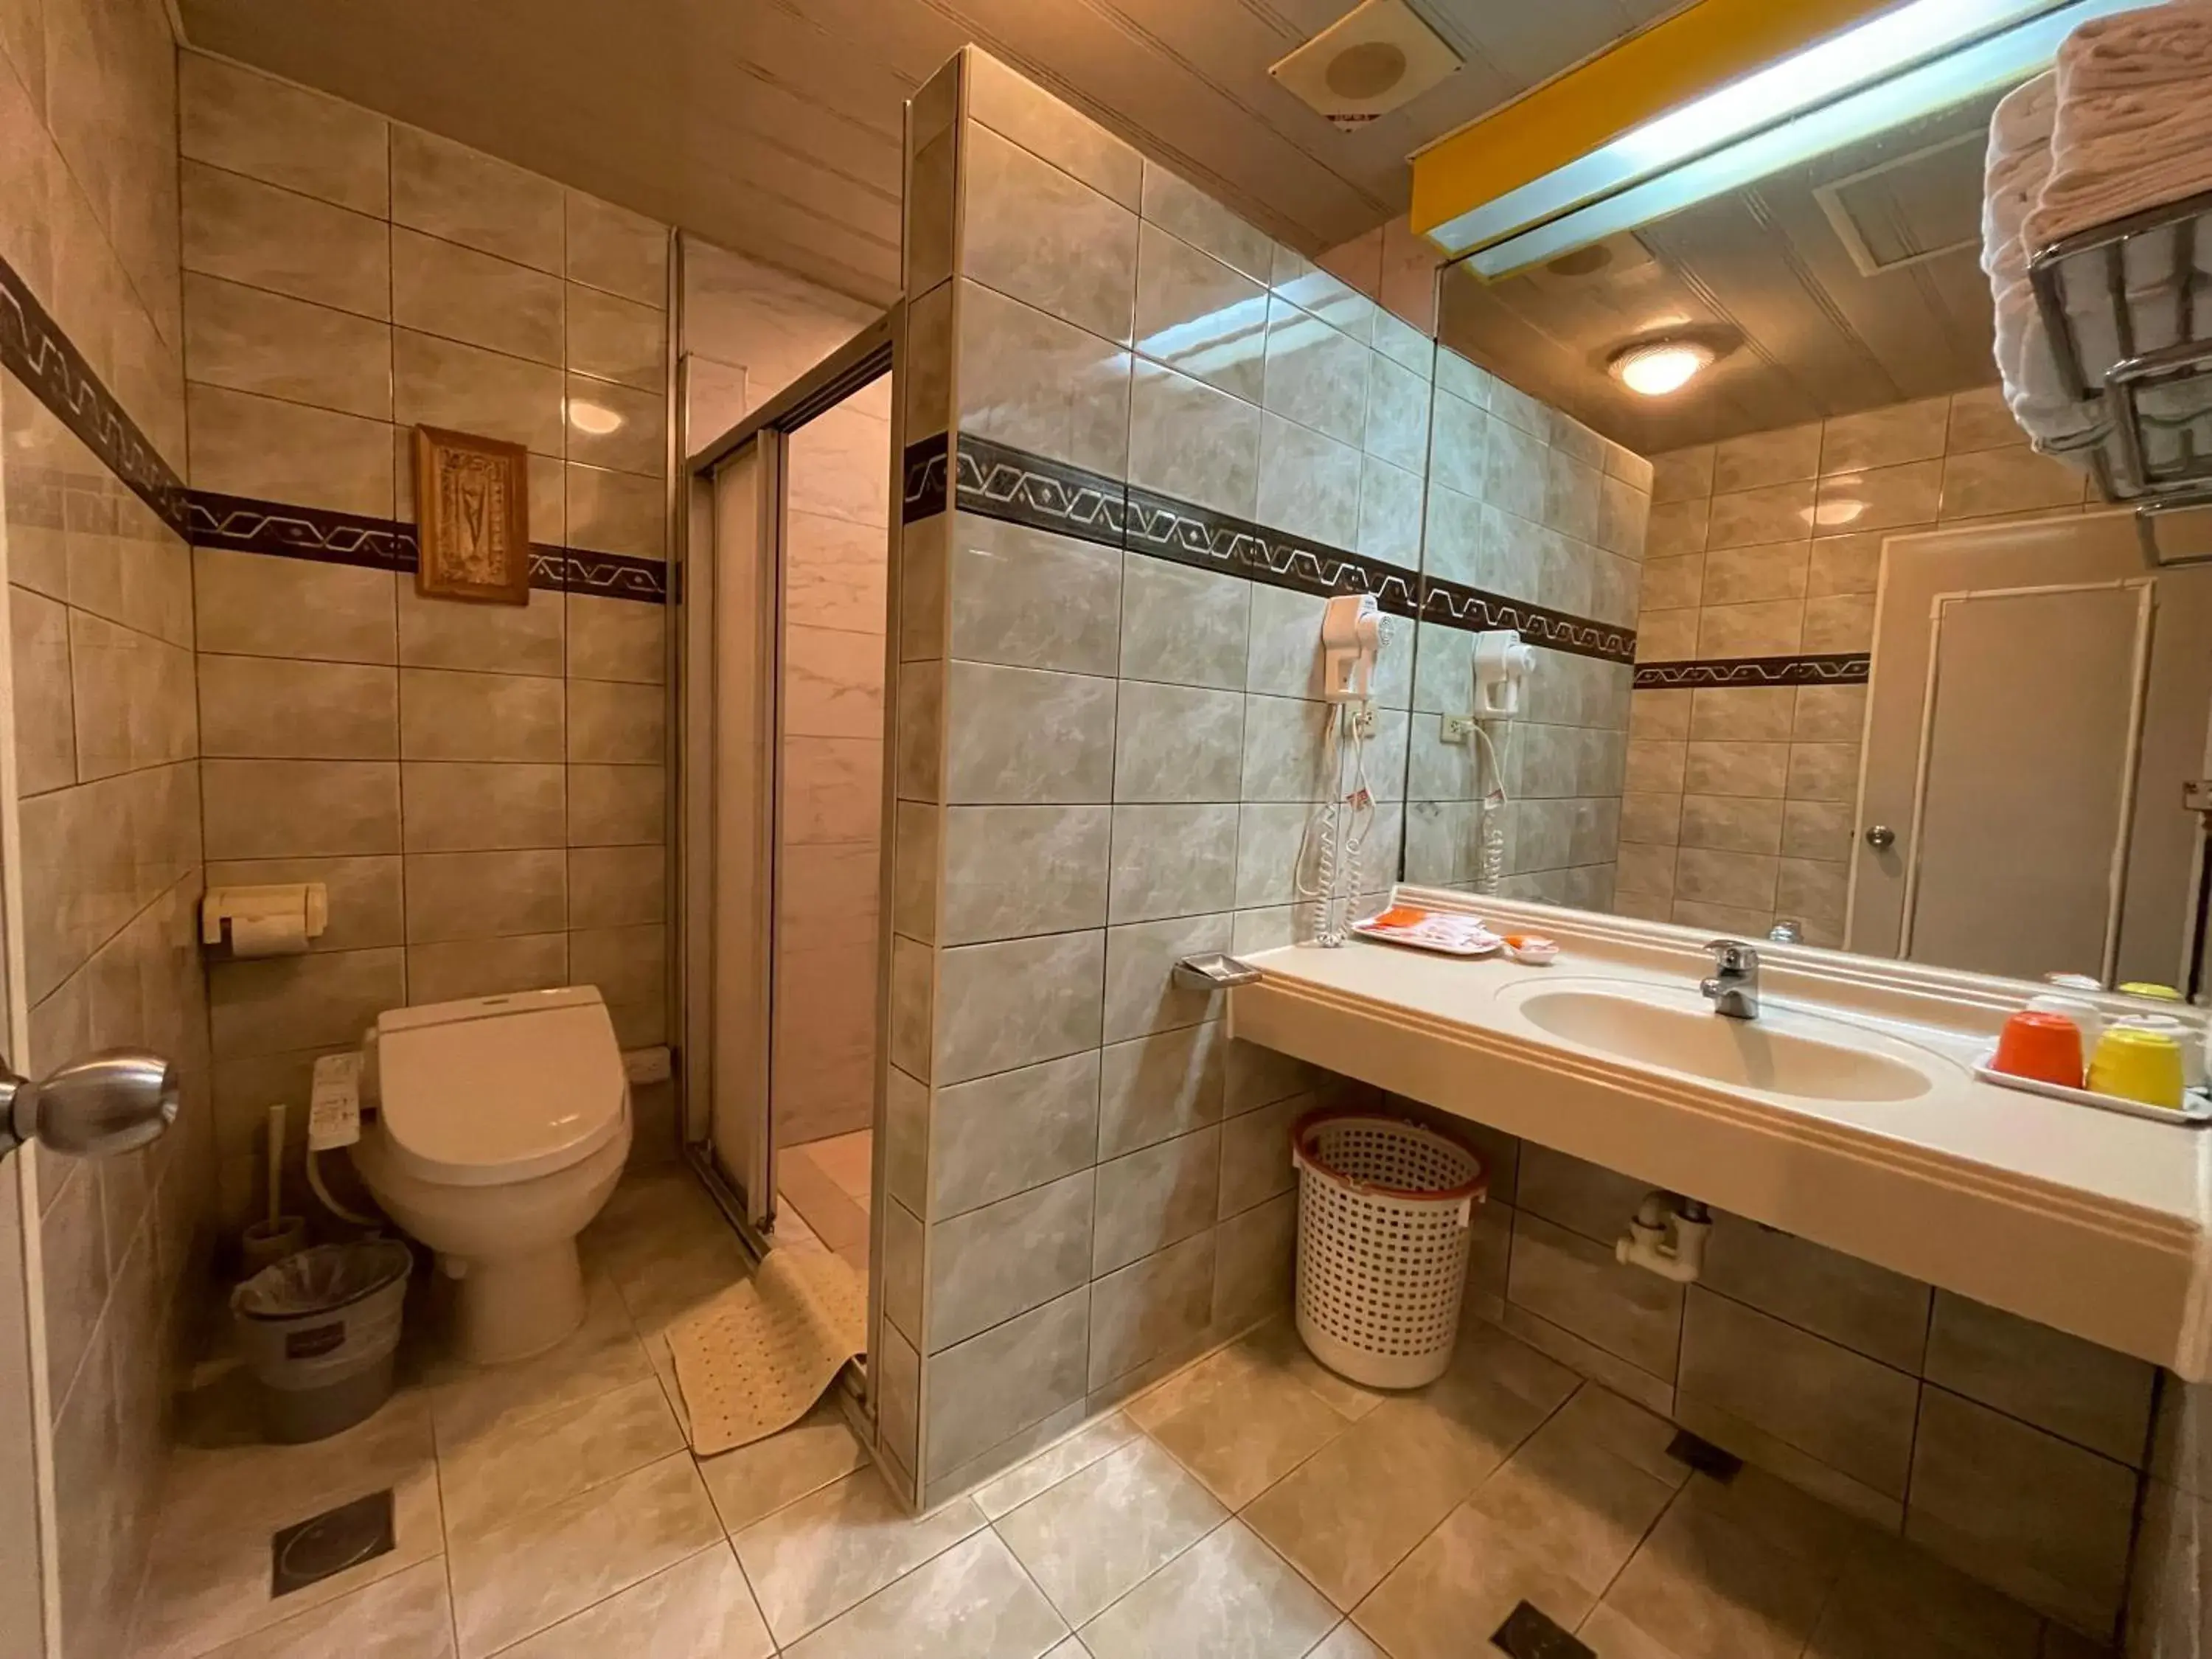 Bathroom in Wenpin Hotel - Pier 2